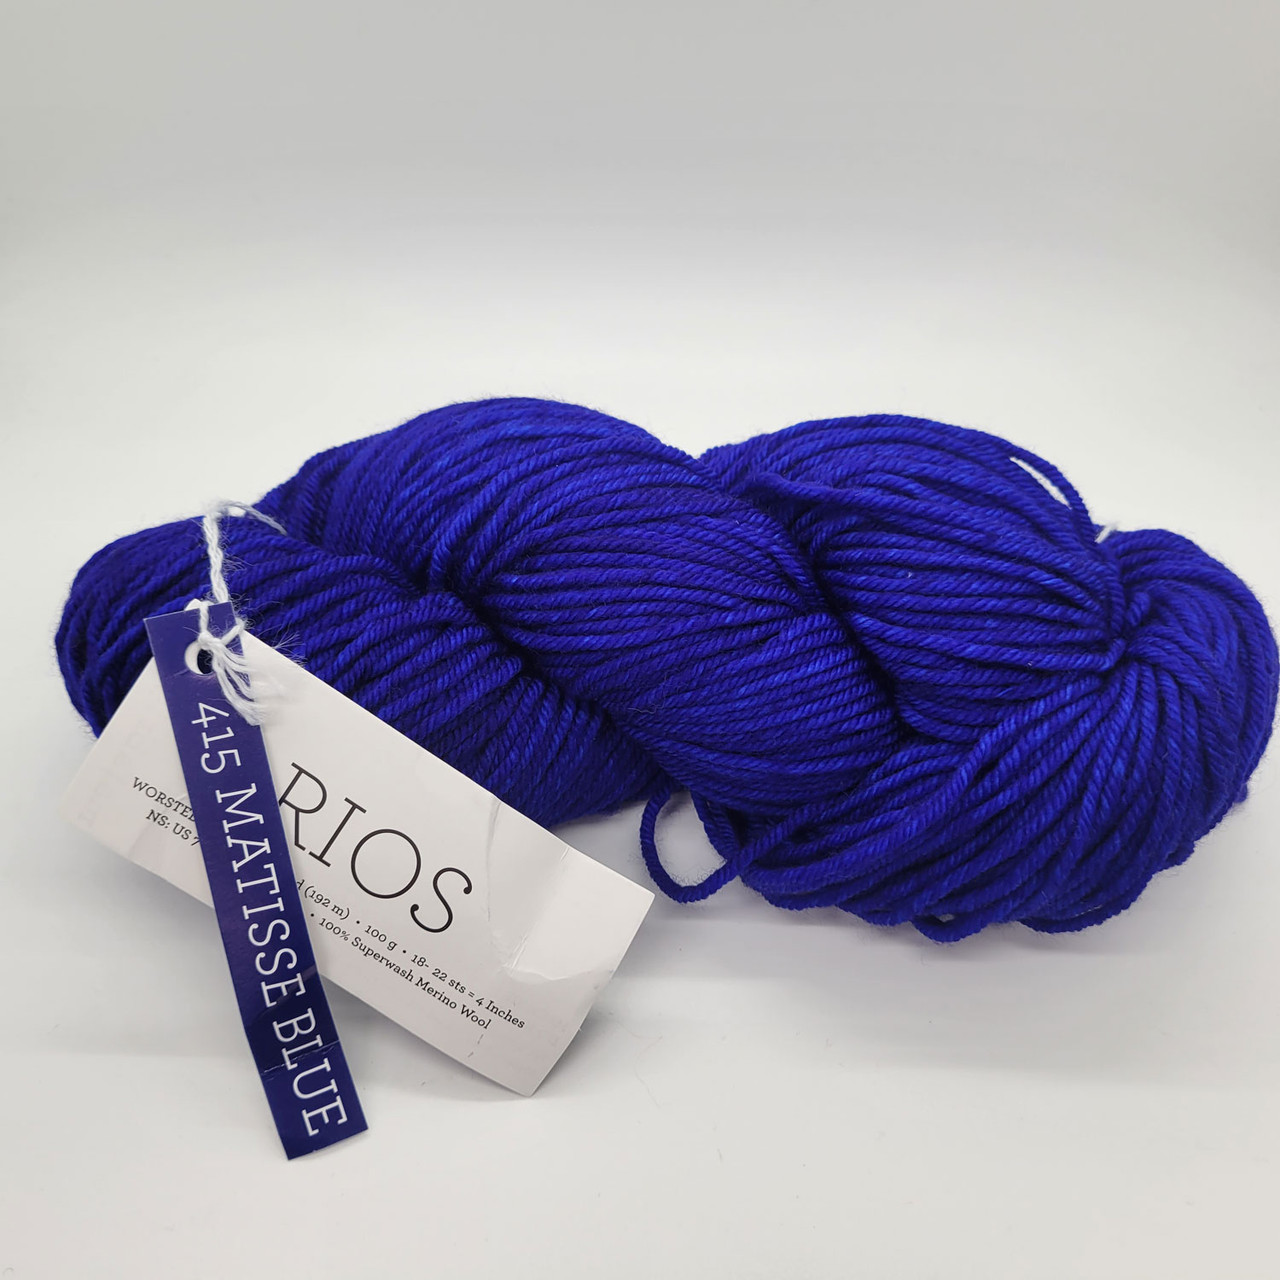 Malabrigo Rios in color Matisse Blue, Merino Wool Worsted Weight